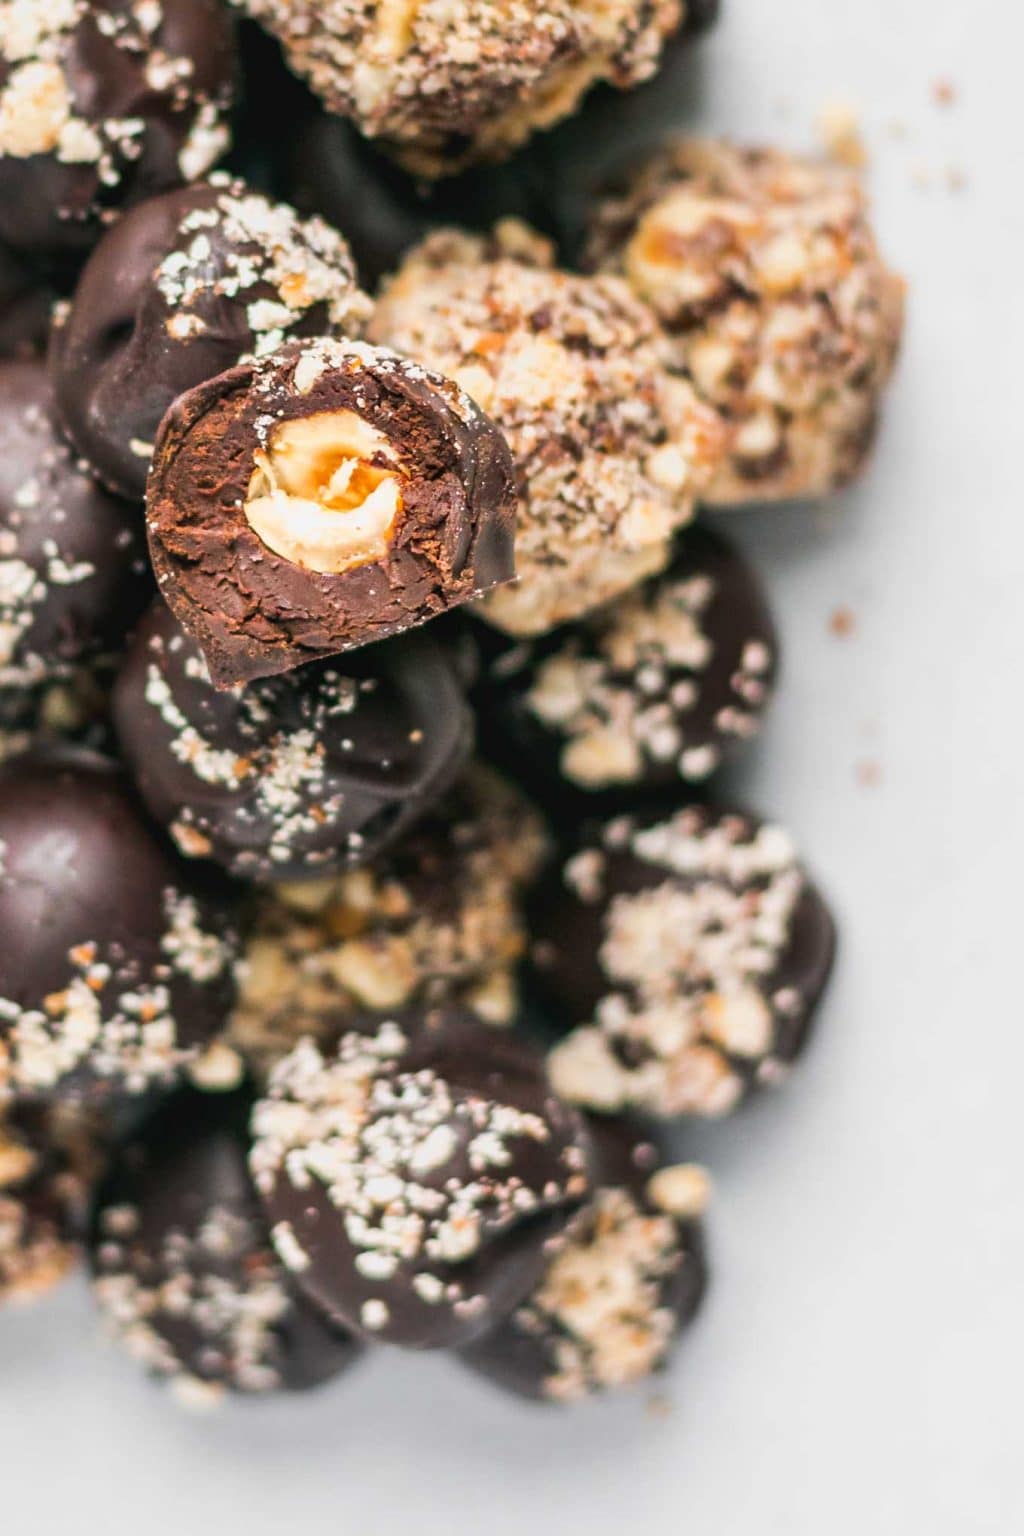 vegan chocolate hazelnut truffles